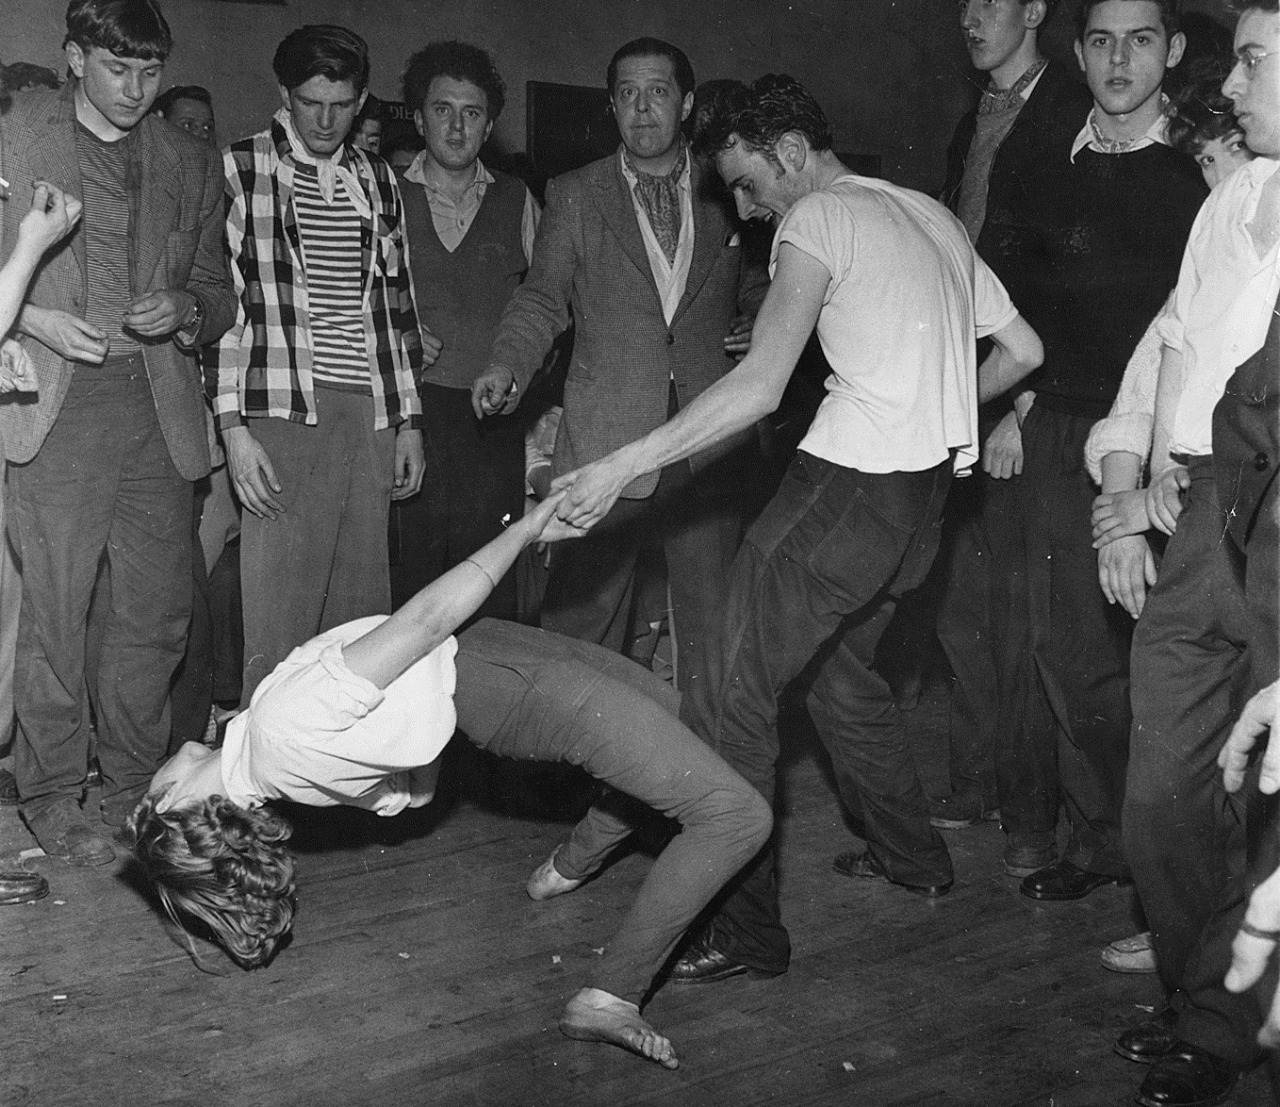 sohaliah:  bastardkeaton:  Dancing at a London jazz club, 1950s. These young jazz